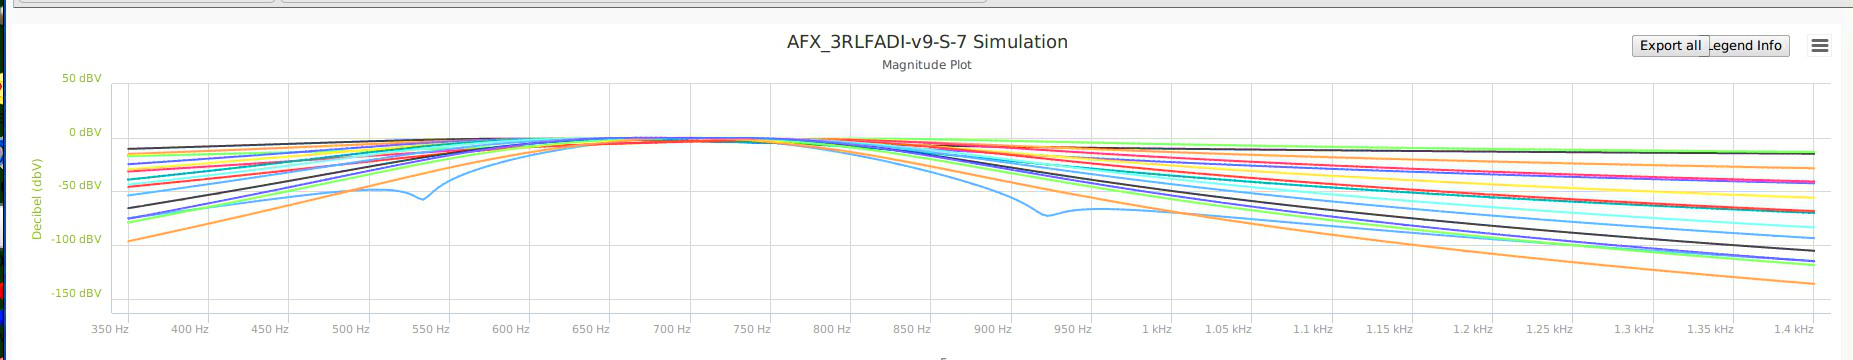 AFX_3RLFADI-v9-B-7-linear-all.jpg